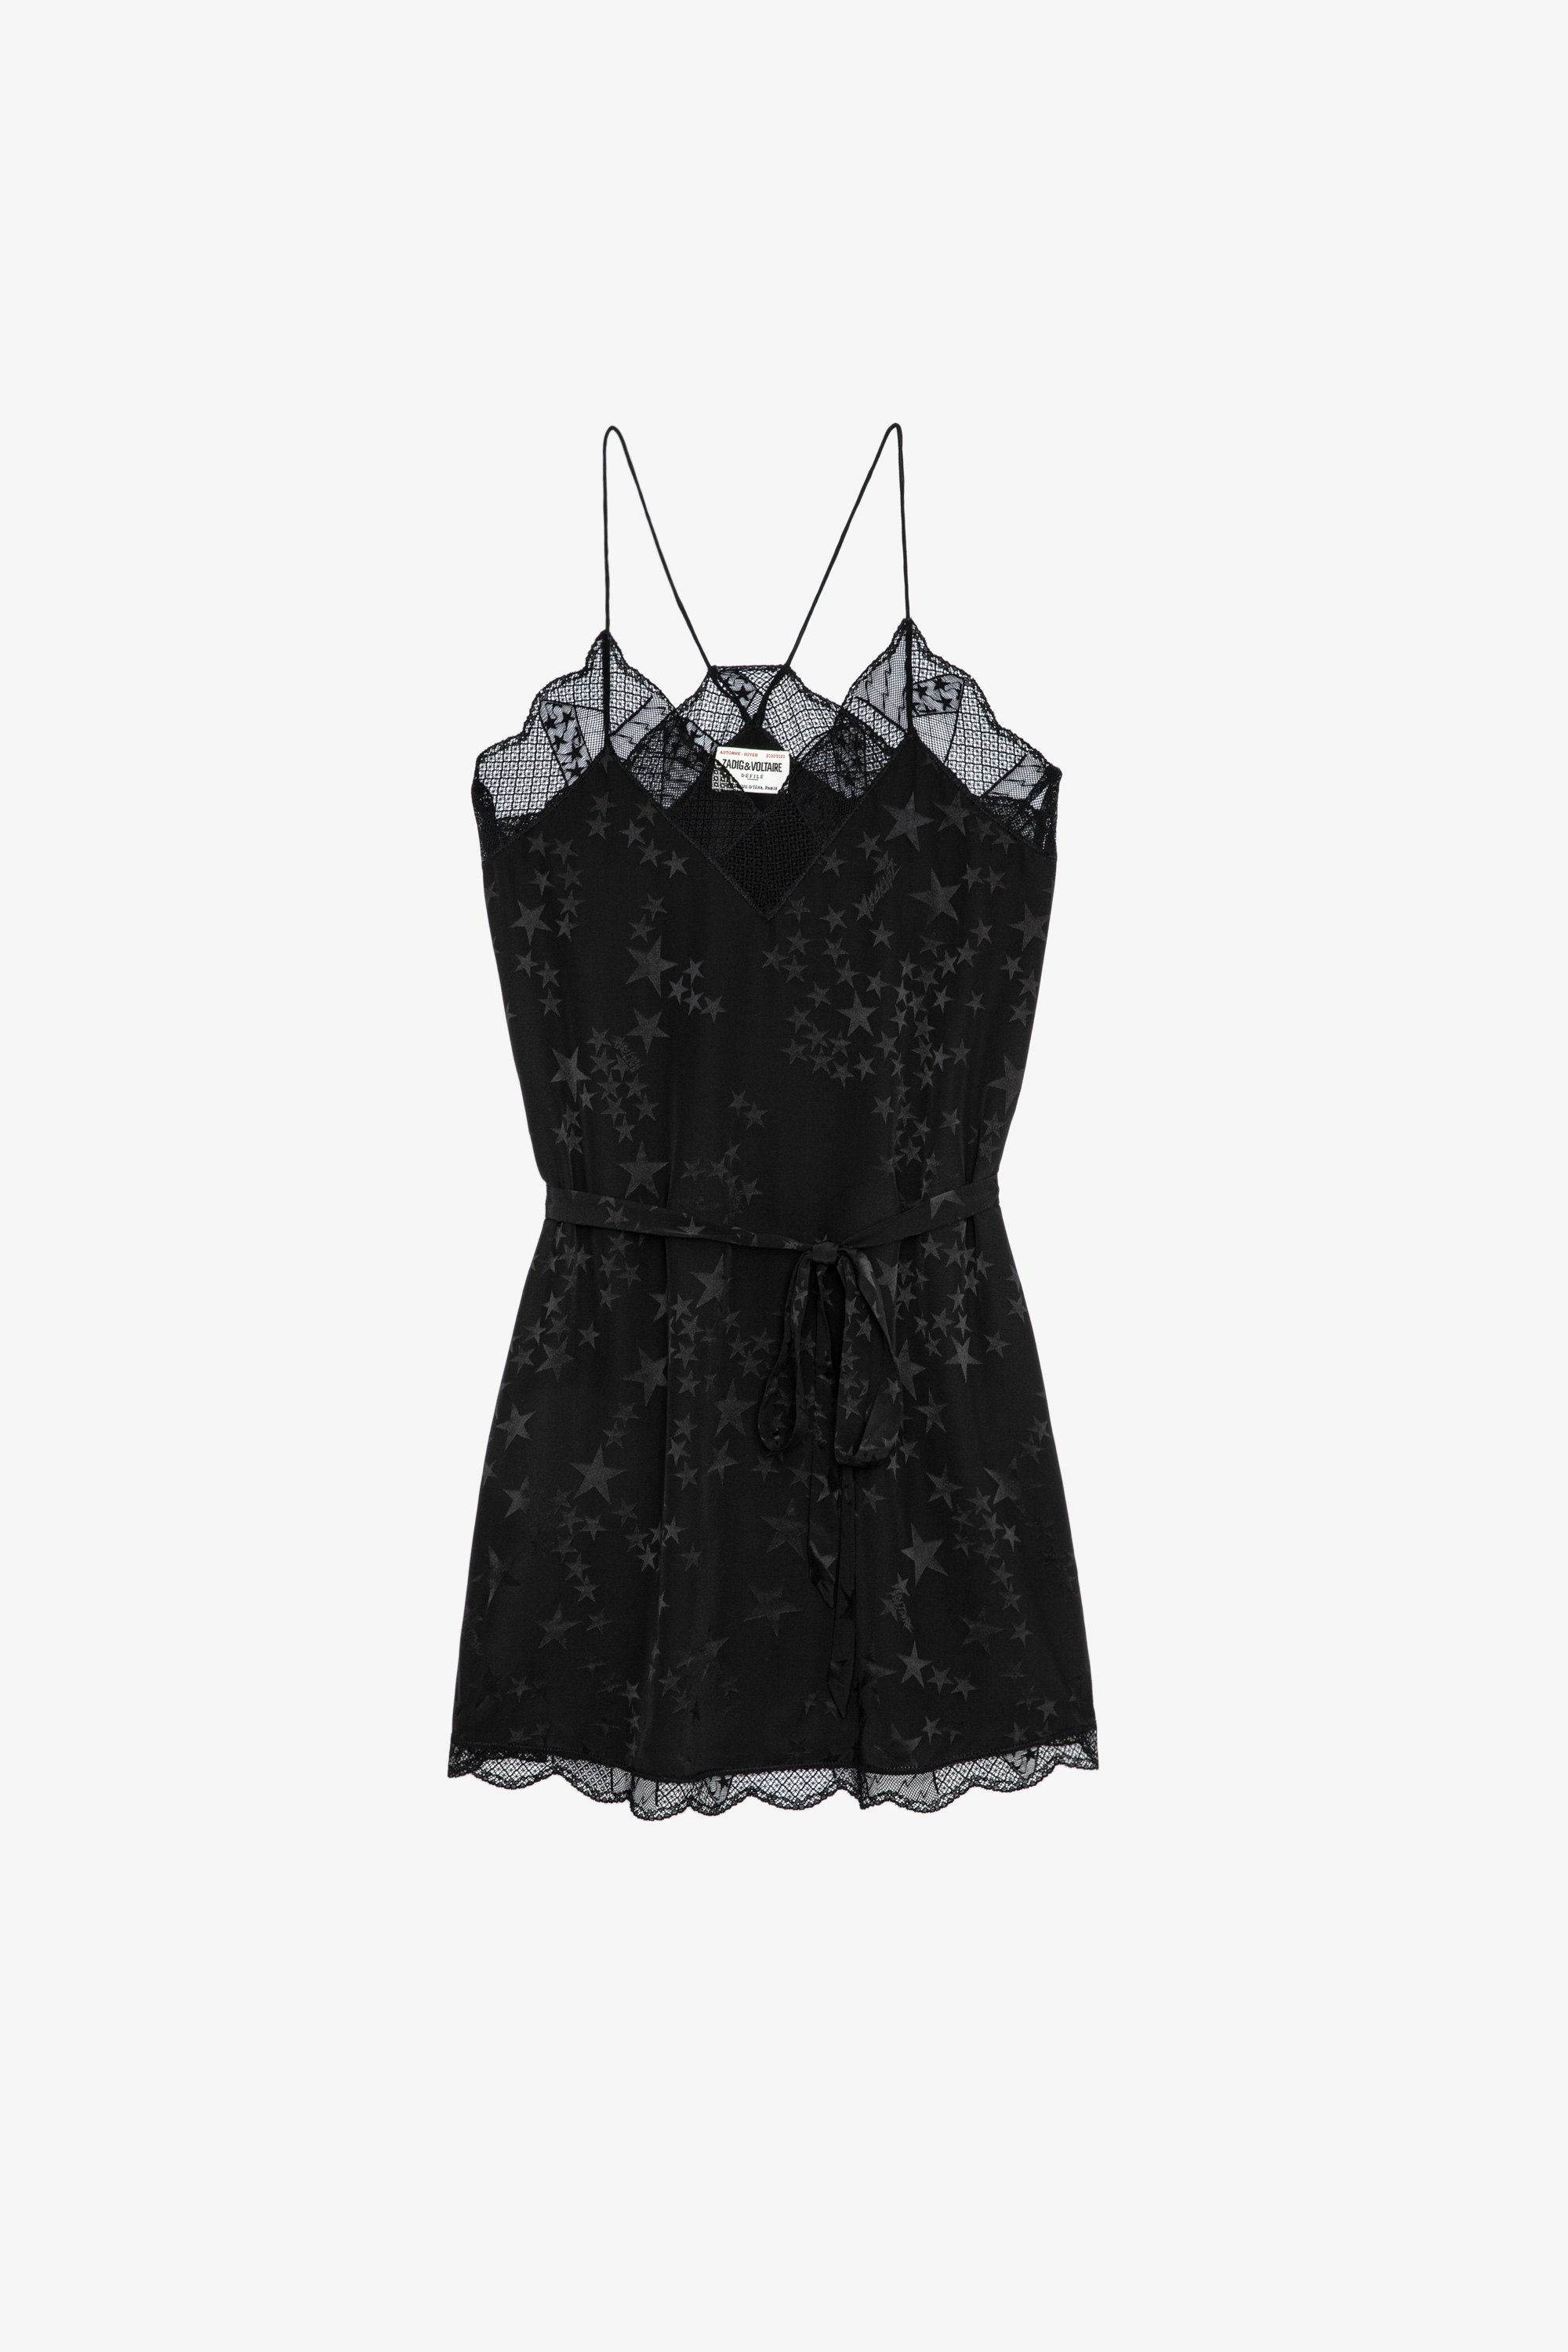 Ristyz Jac Stars Dress Women’s star-studded black silk jacquard mini dress tied at the waist with lace trim